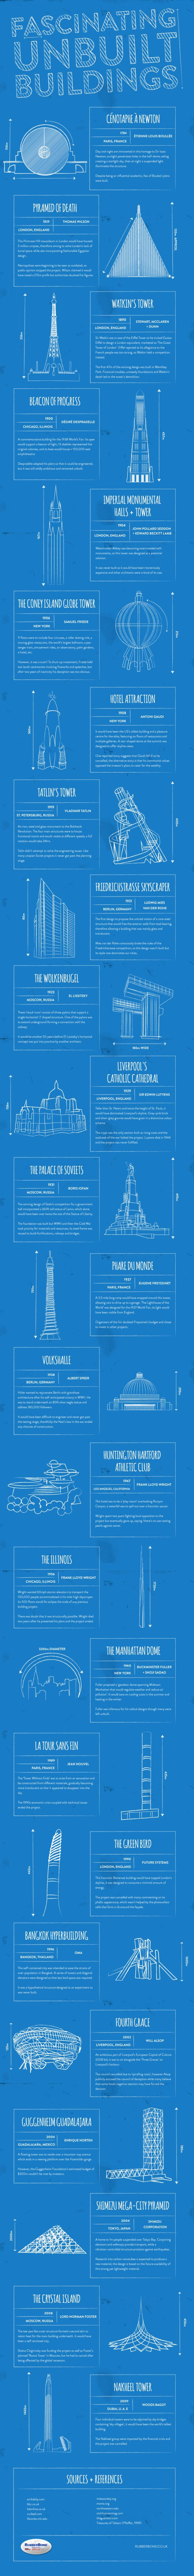 Infographic - fascinating unbuilt buildings